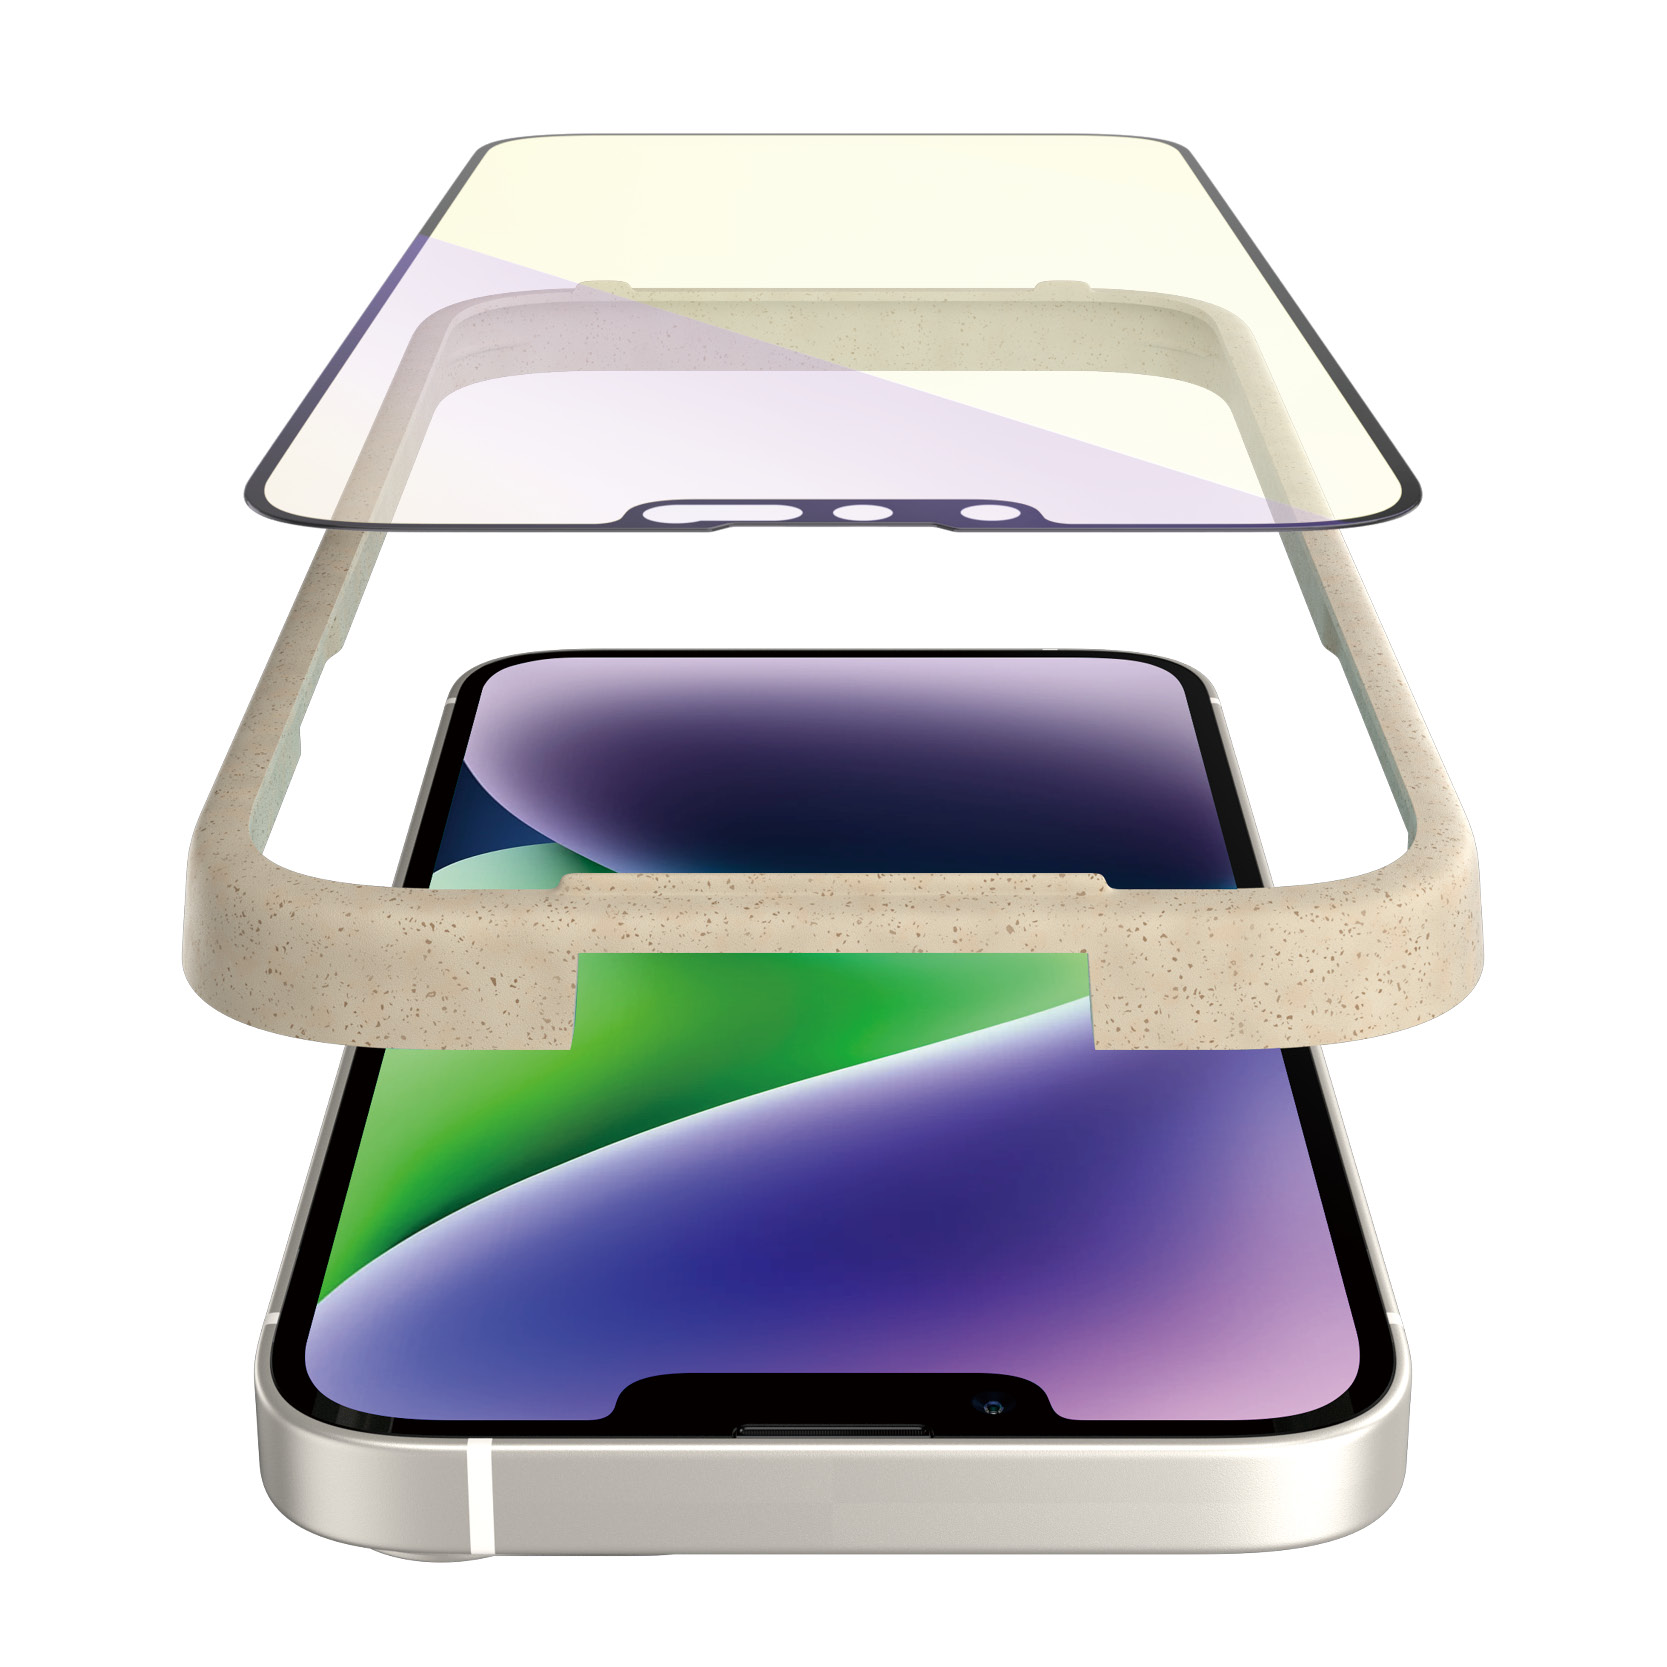 Protector de ecran PanzerGlass anti-lumina albastra Apple iPhone 14 Plus | 13 Pro Max | Potrivire ultra-larga cu. EasyAligner thumb